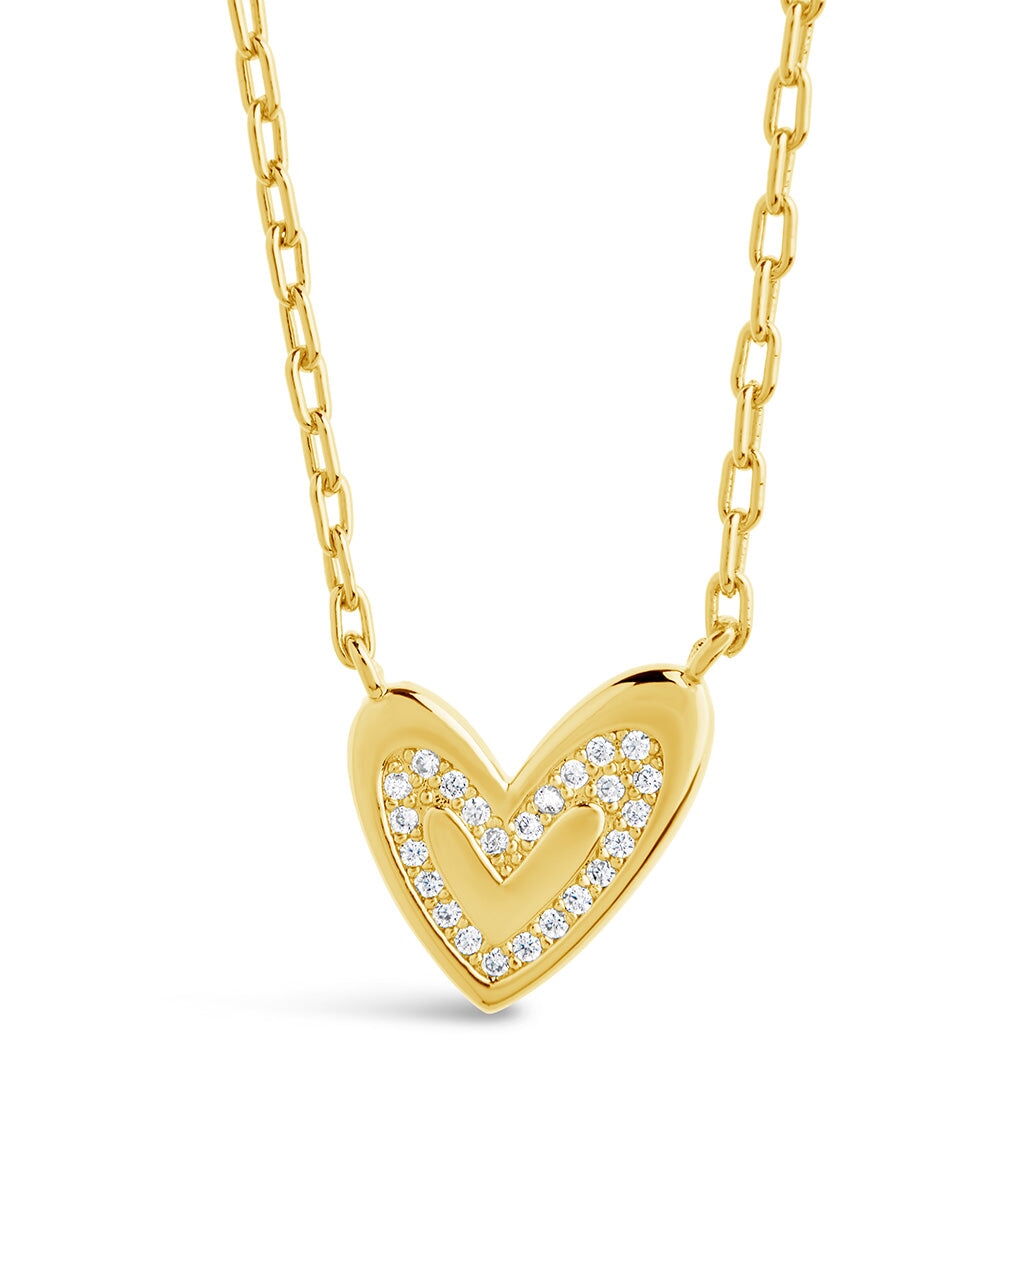 Mabel CZ Heart Pendant Necklace Necklace Sterling Forever Gold 